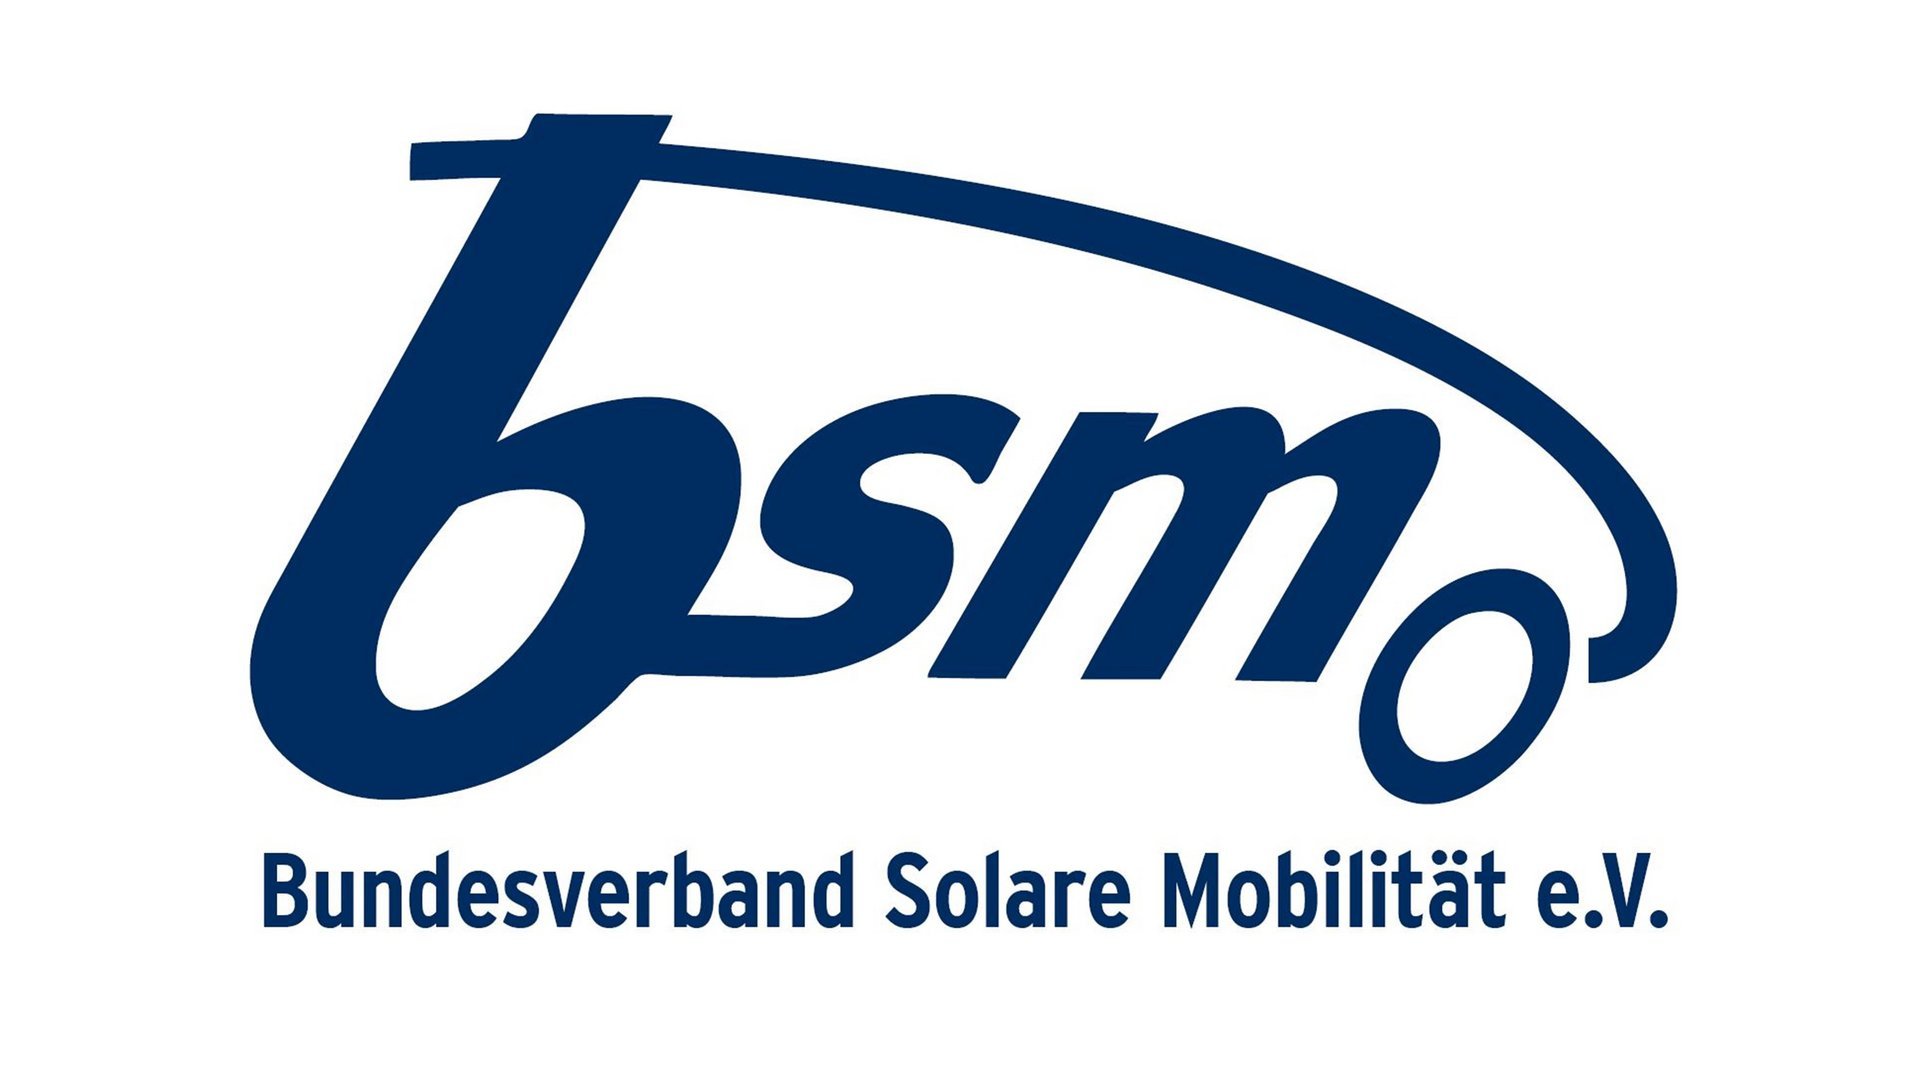 BSM Logo Bundesverband Solare Mobilität e.V.